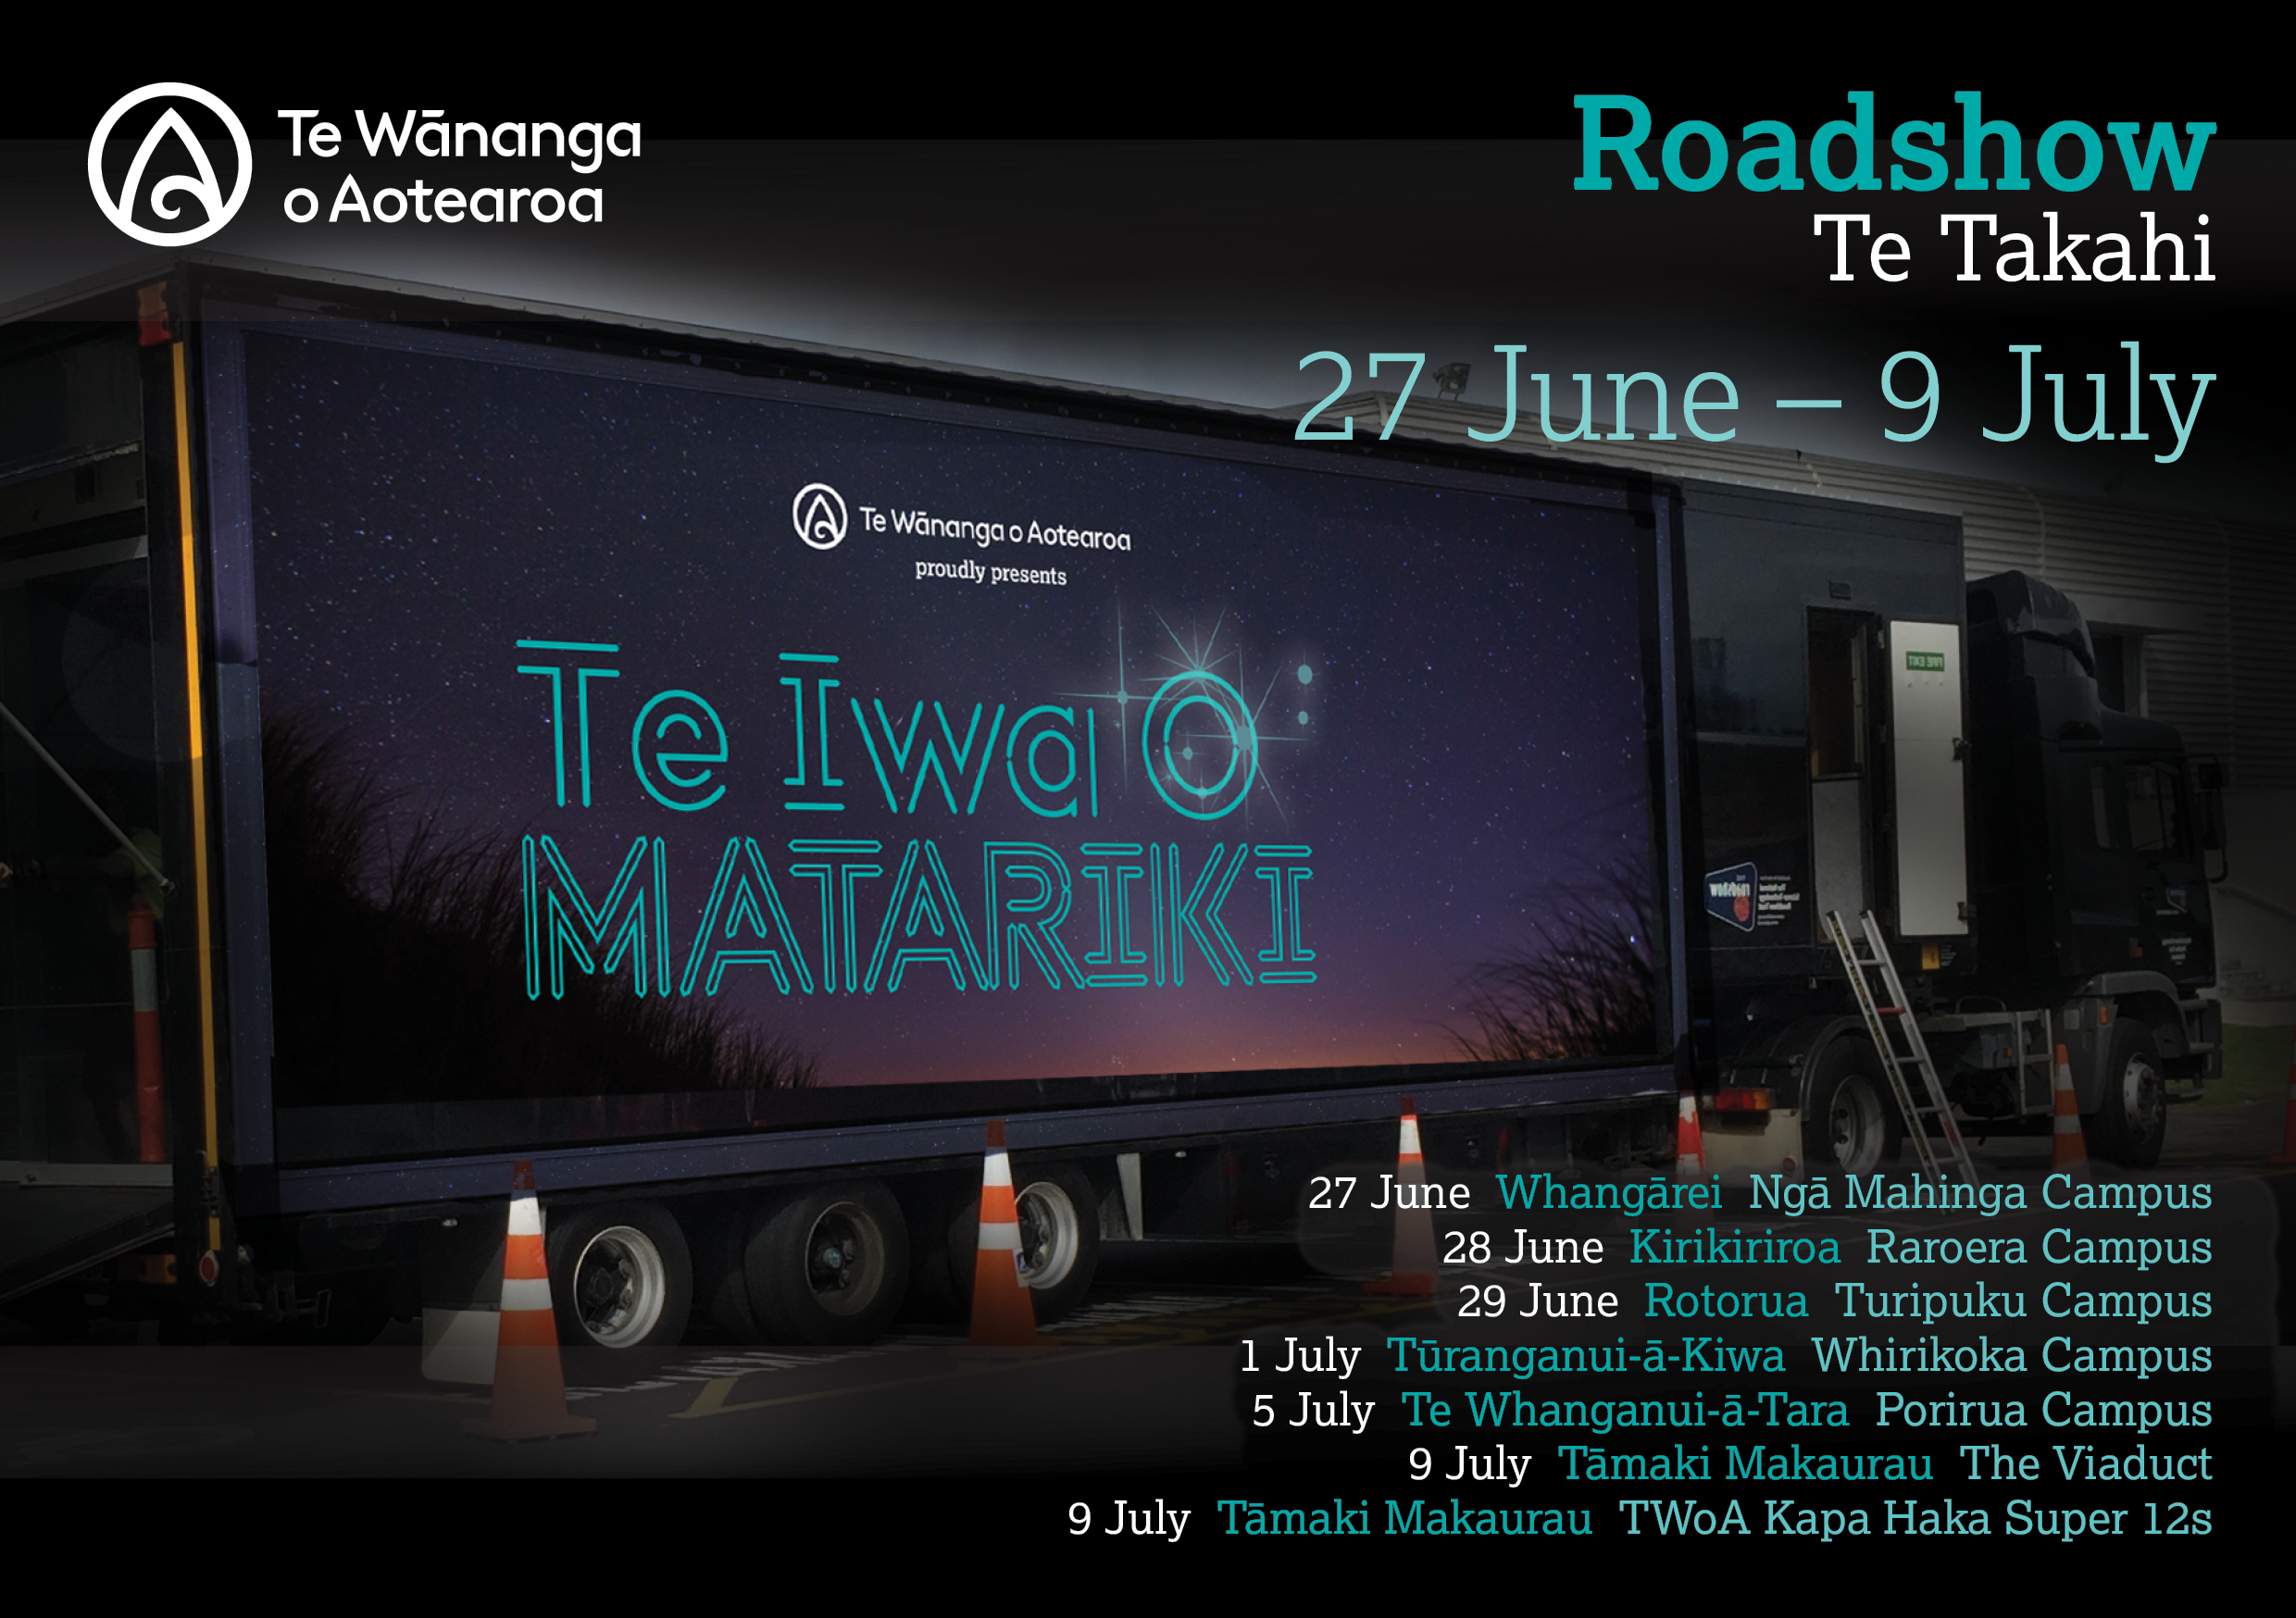 Te Iwa o Matariki roadshow dates 